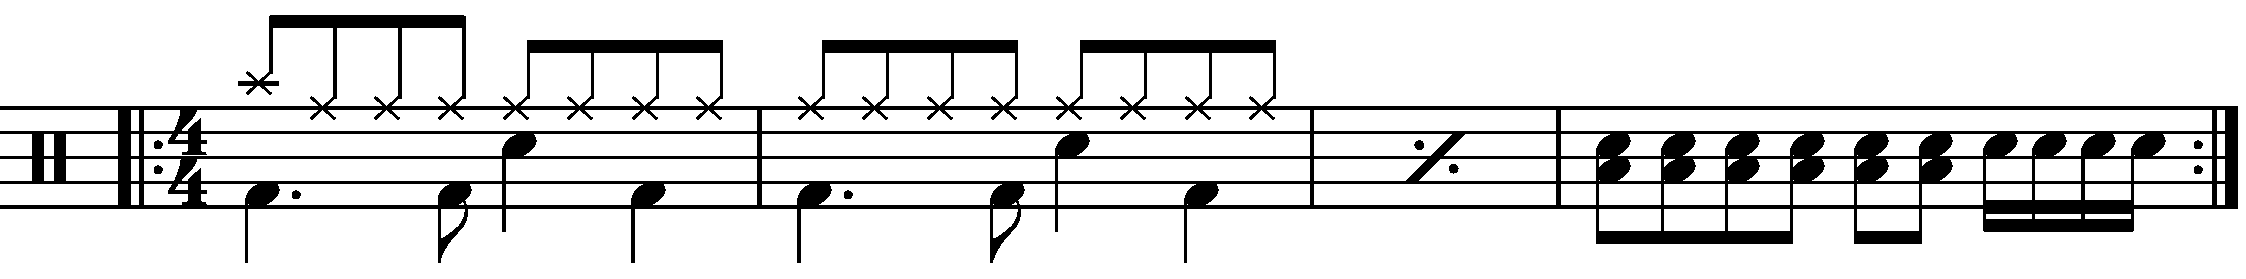 A four bar phrase using a half time groove.